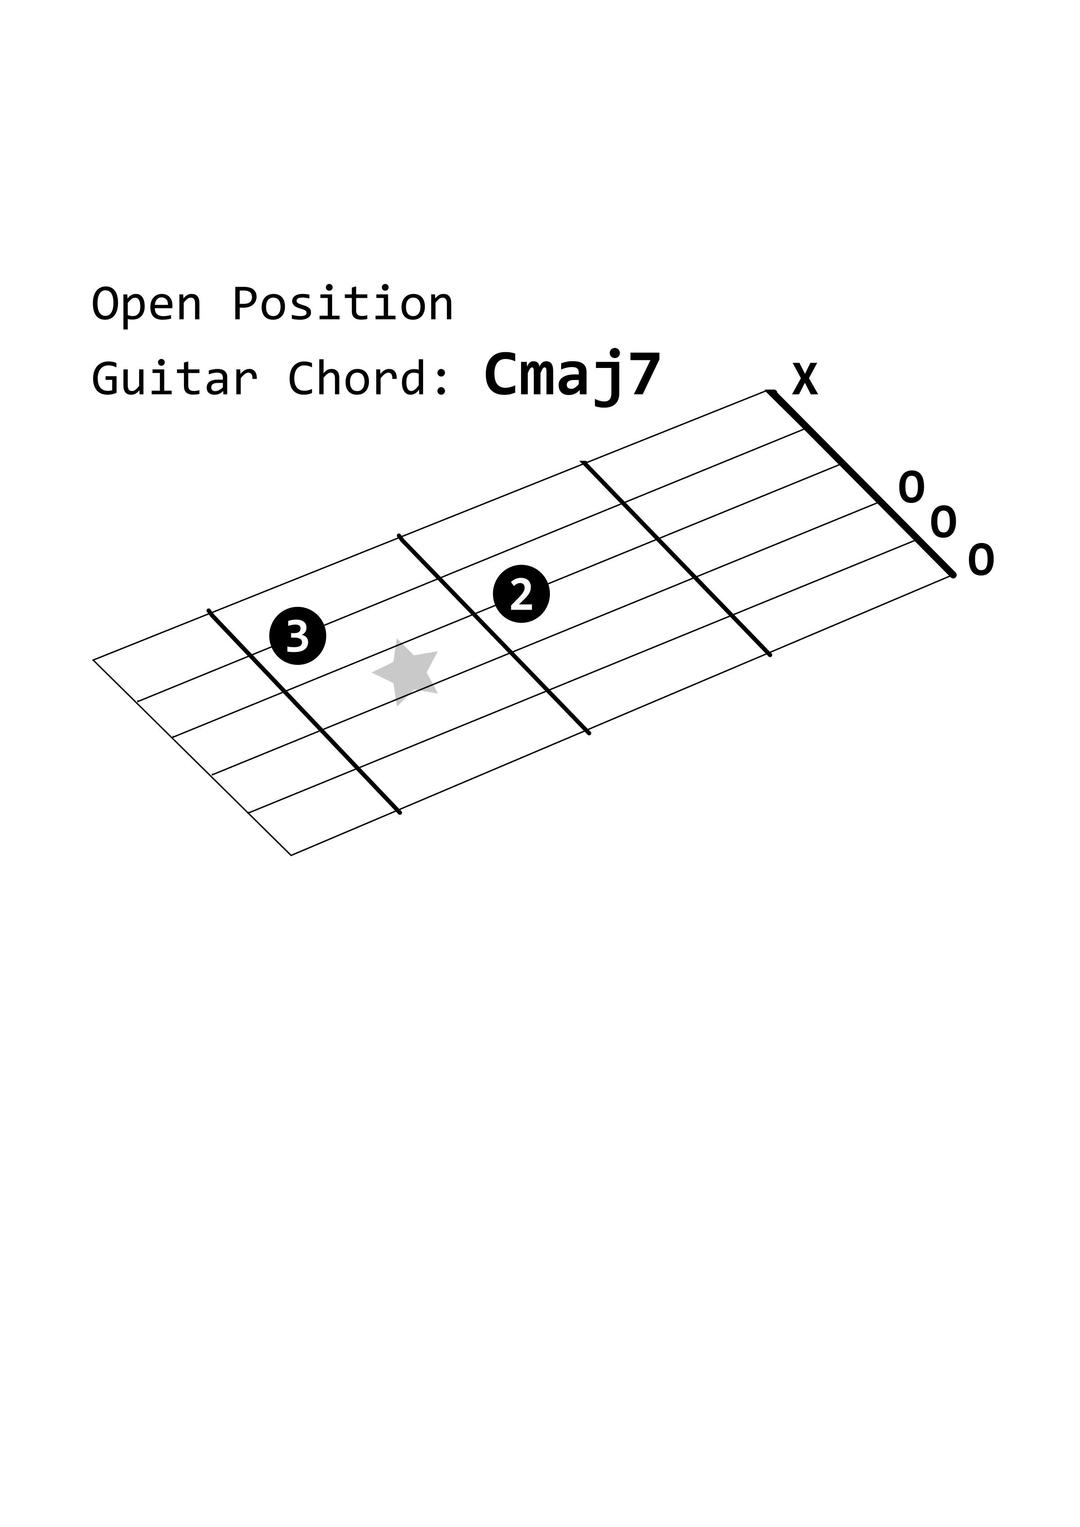 Open Position Guitar Chord: Cmaj7 png transparent